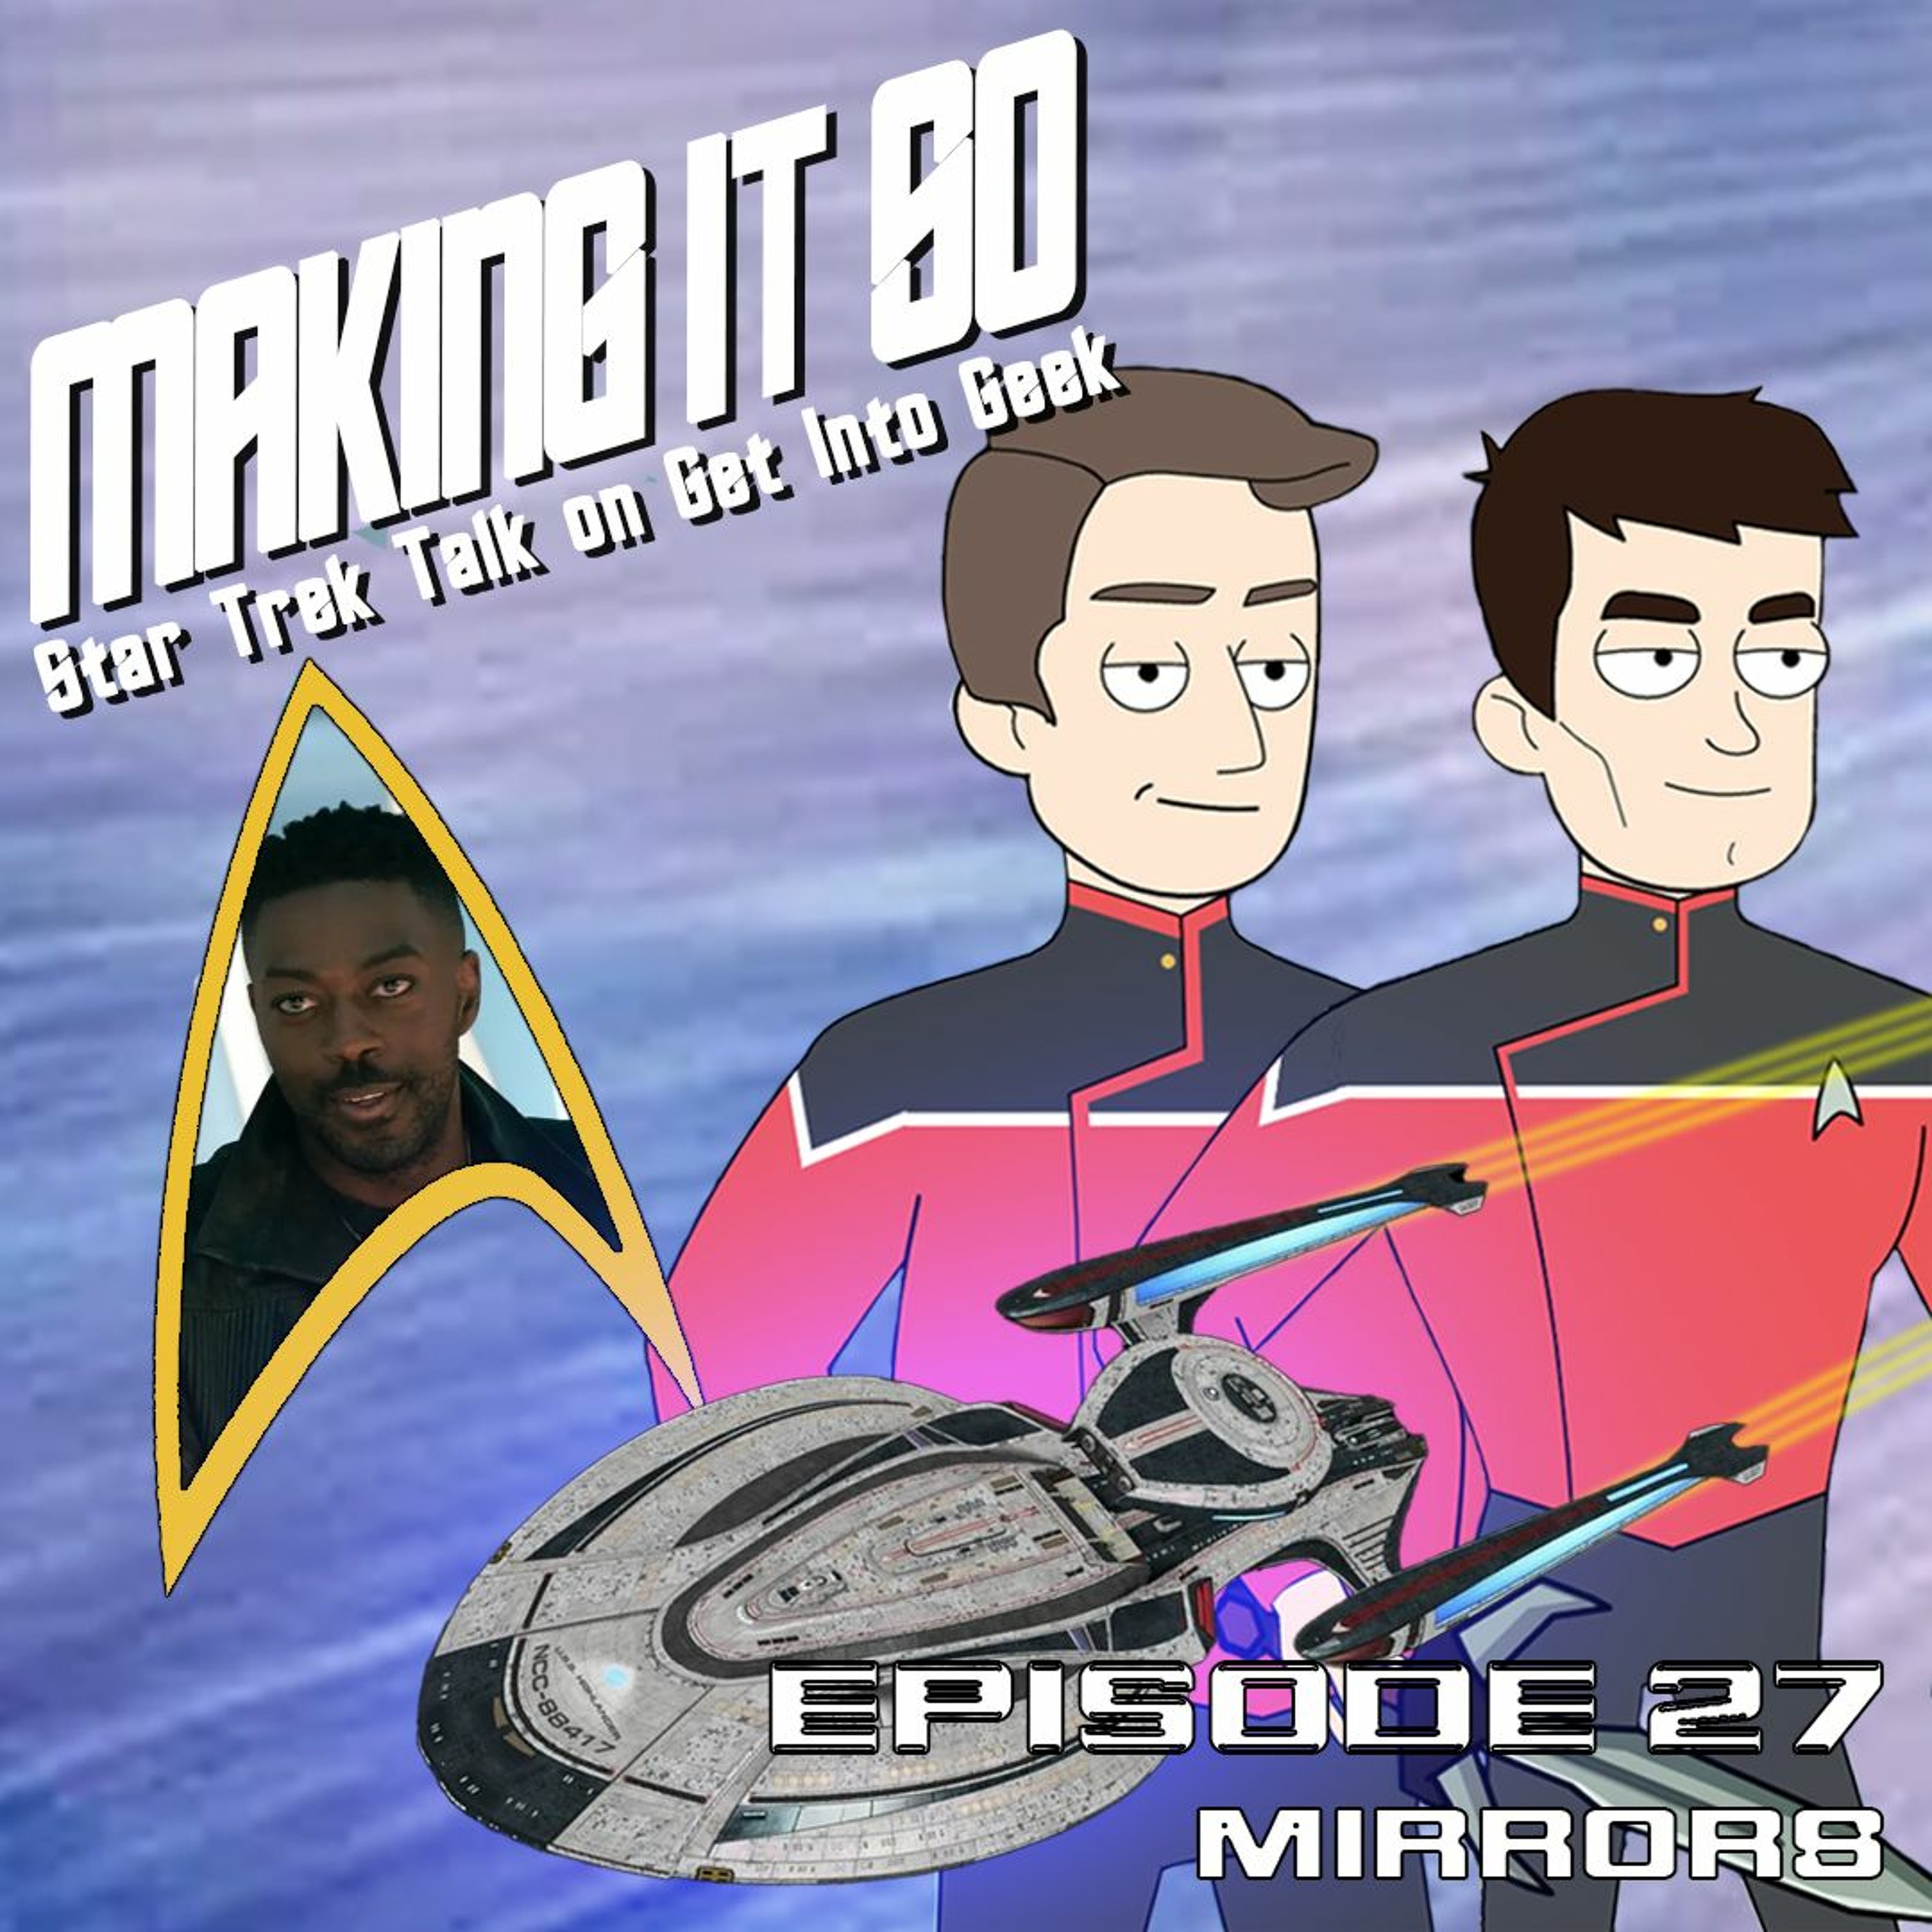 Mirrors (Making It So - Star Trek Talk Episode 27)